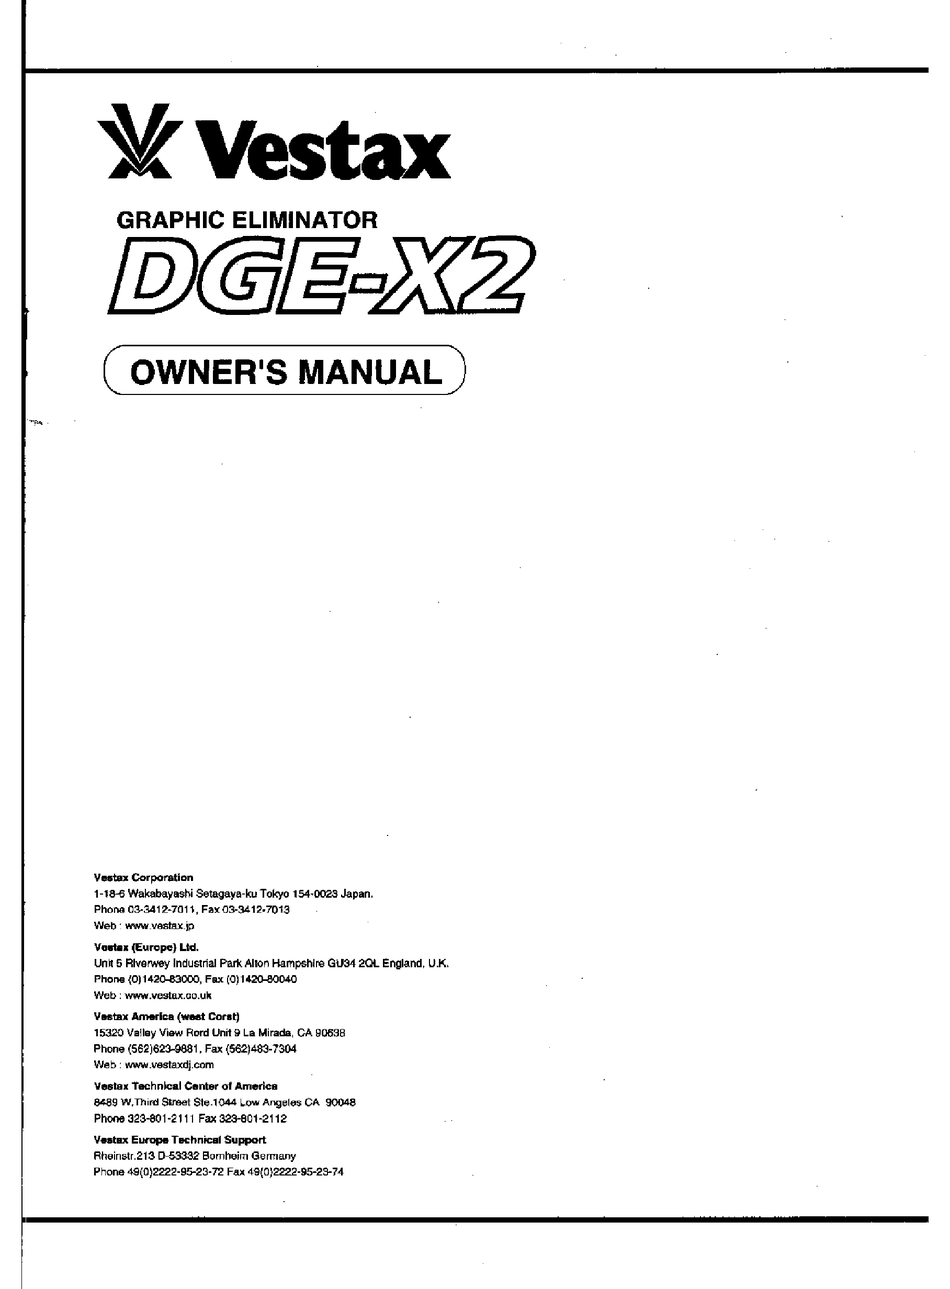 VESTAX DGE-X2 OWNER'S MANUAL Pdf Download | ManualsLib